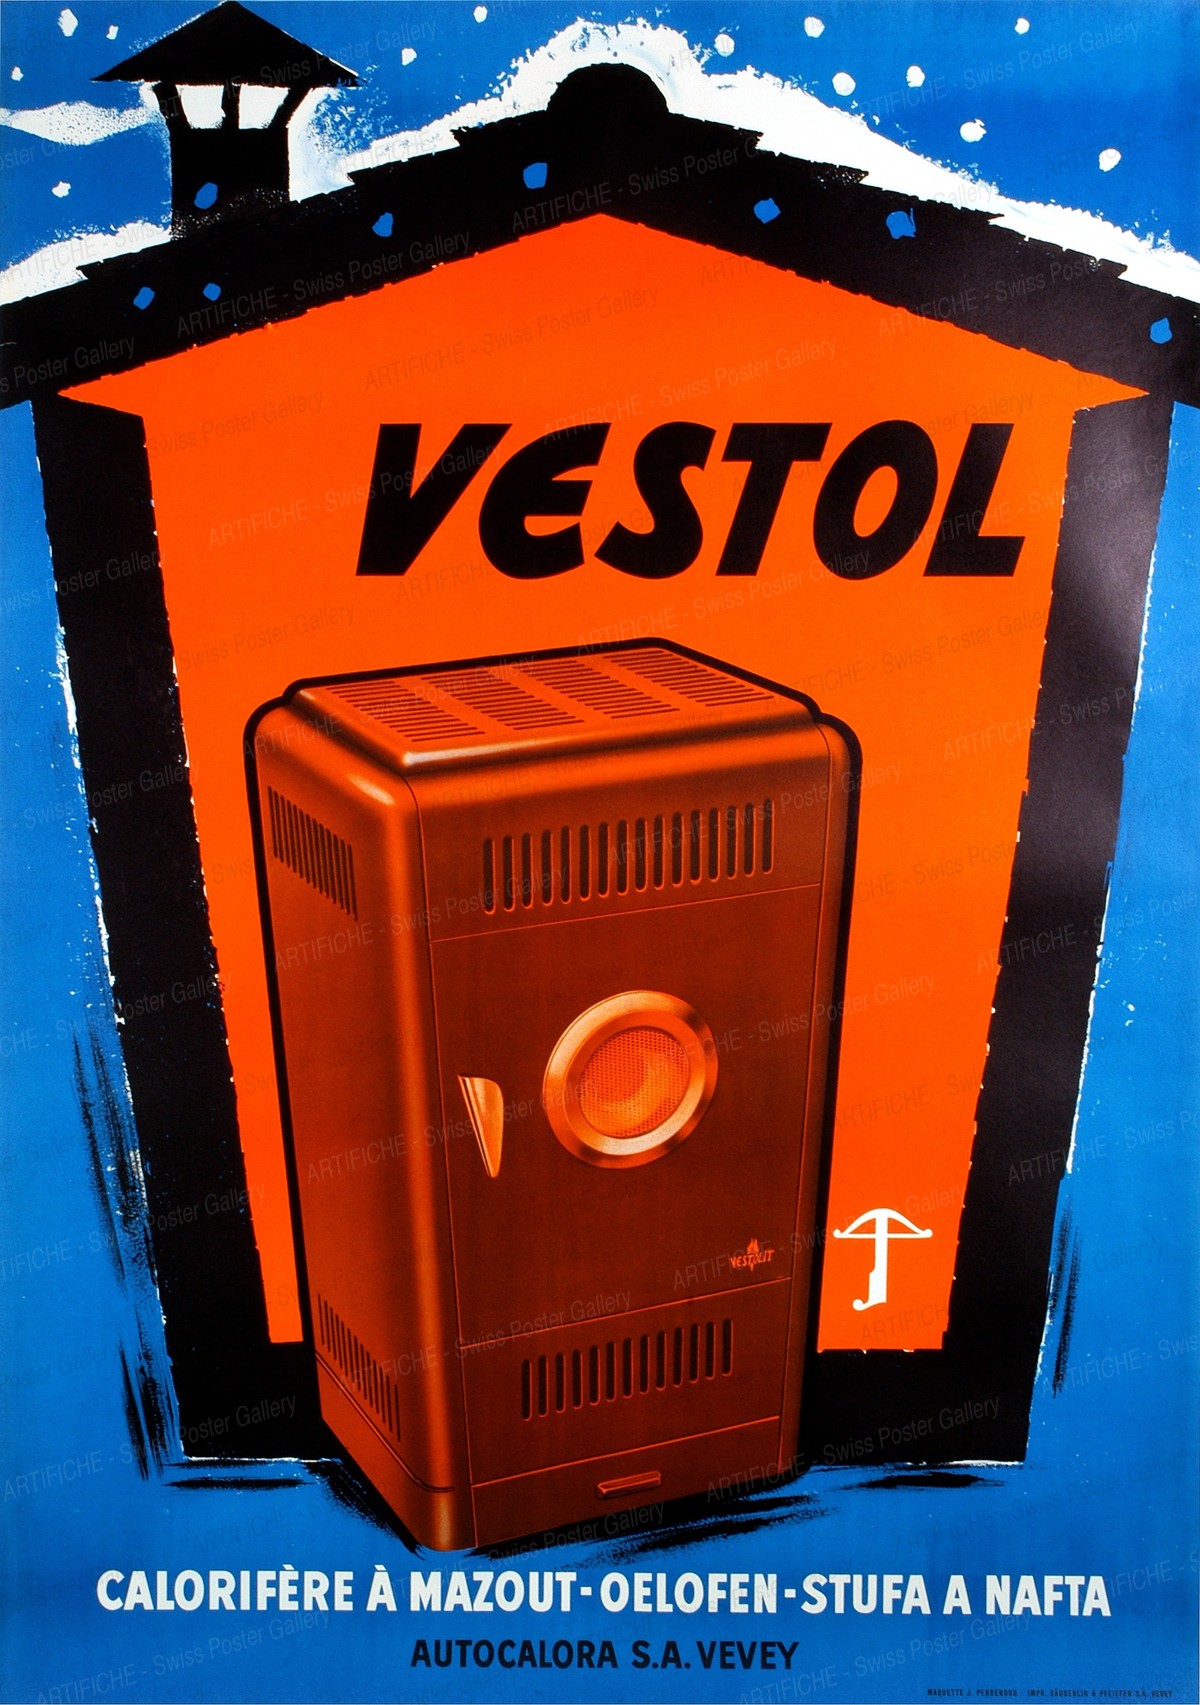 Vestol Oil – Huile – Autocalora SA Vevey, Artist unknown